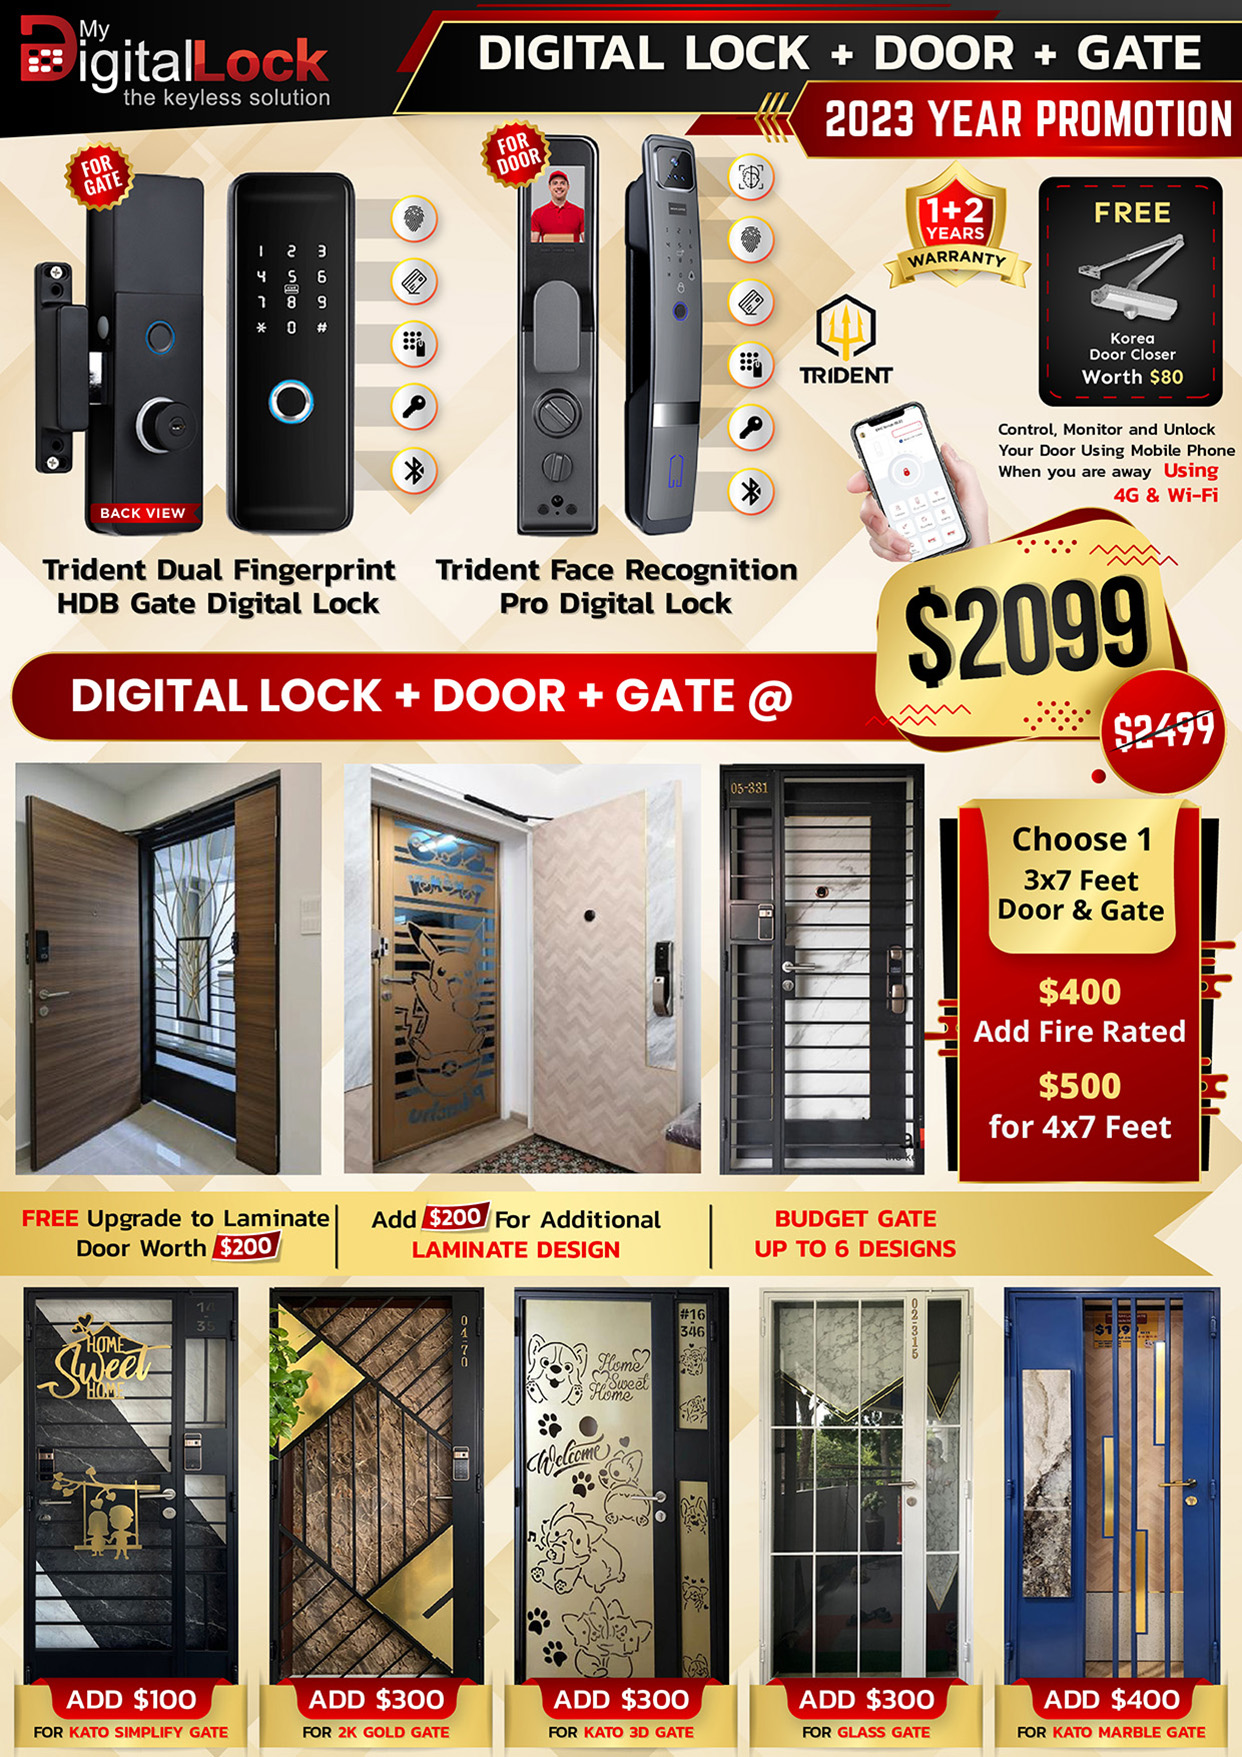 Digitallock-Door-Gate-Promotion-2023-year-Promotion